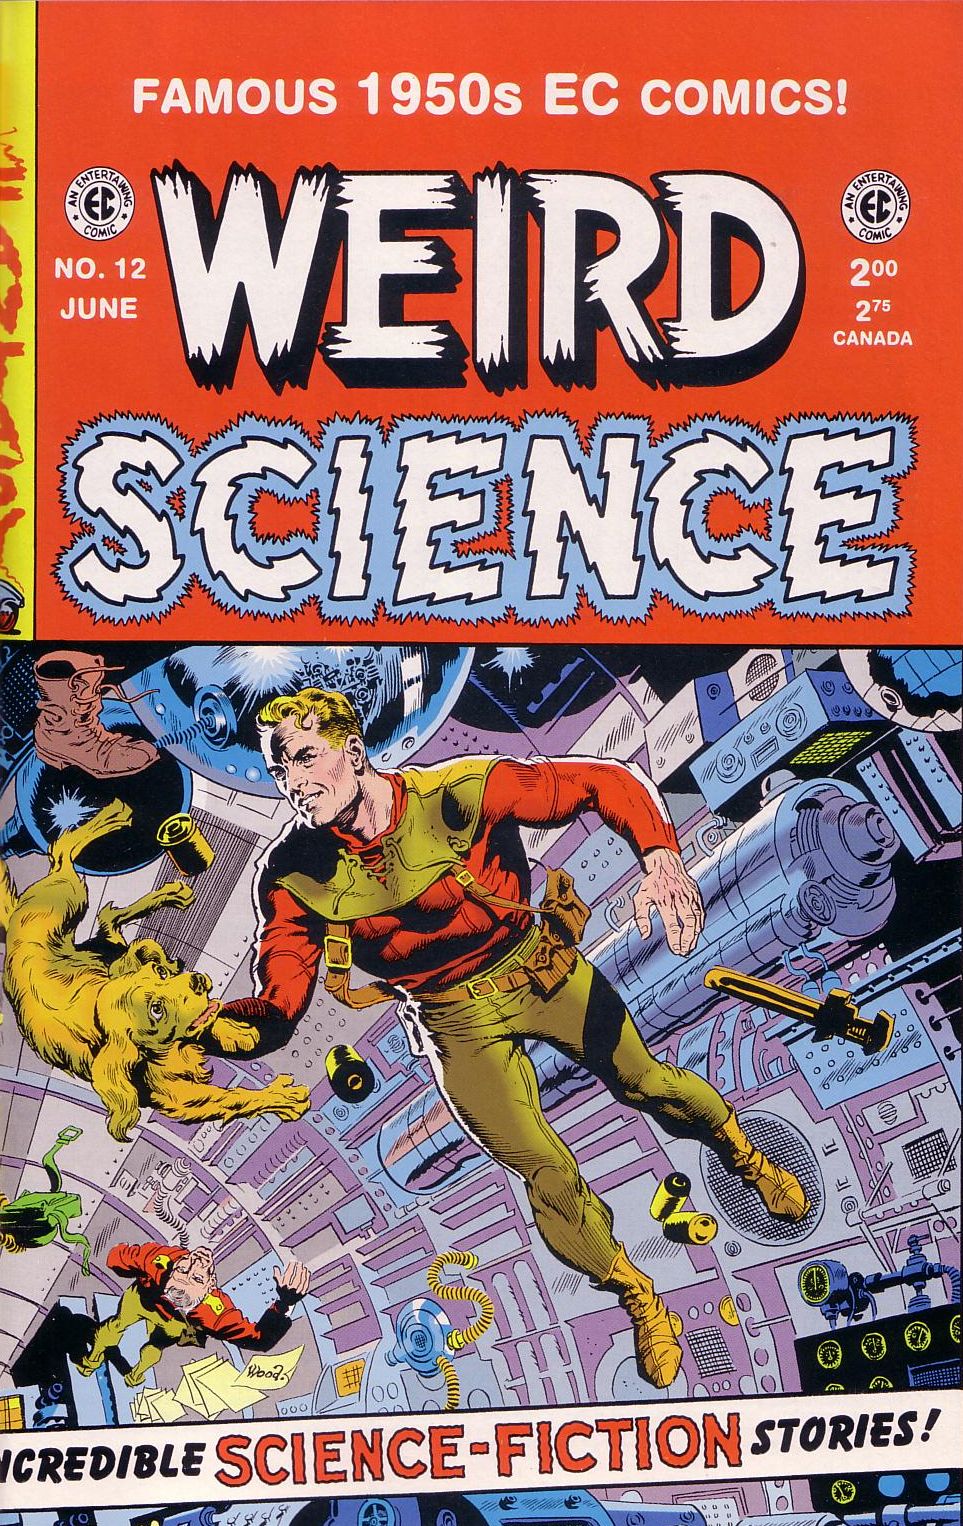 Issue 12. Weirdo комикс. Science Comics. Weird Science. Incredible Science.